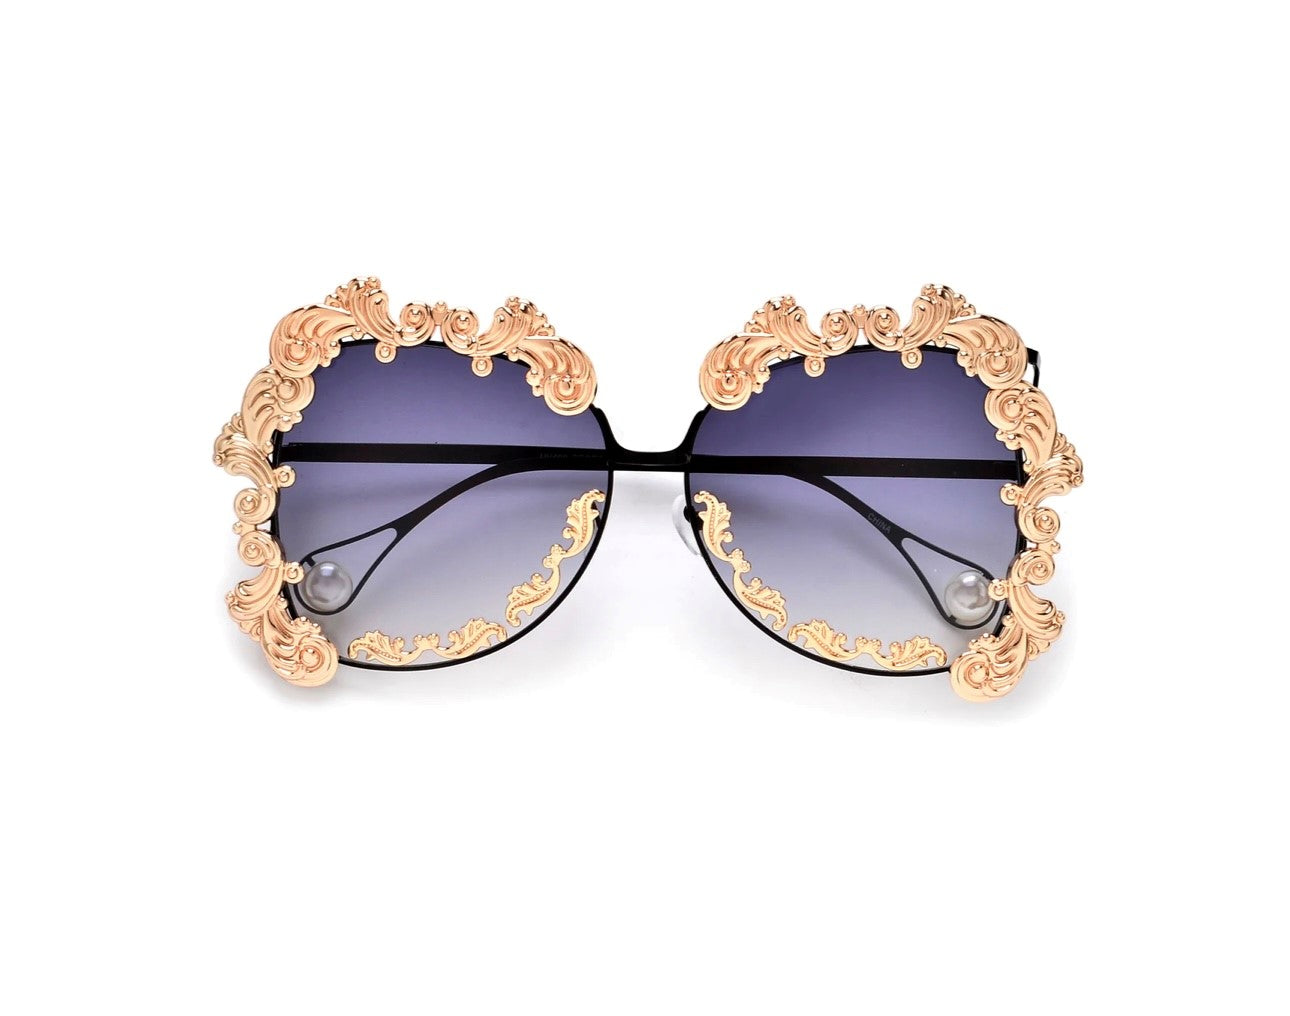 Elaborate Baroque Design Pearl Tip Temple Glasses